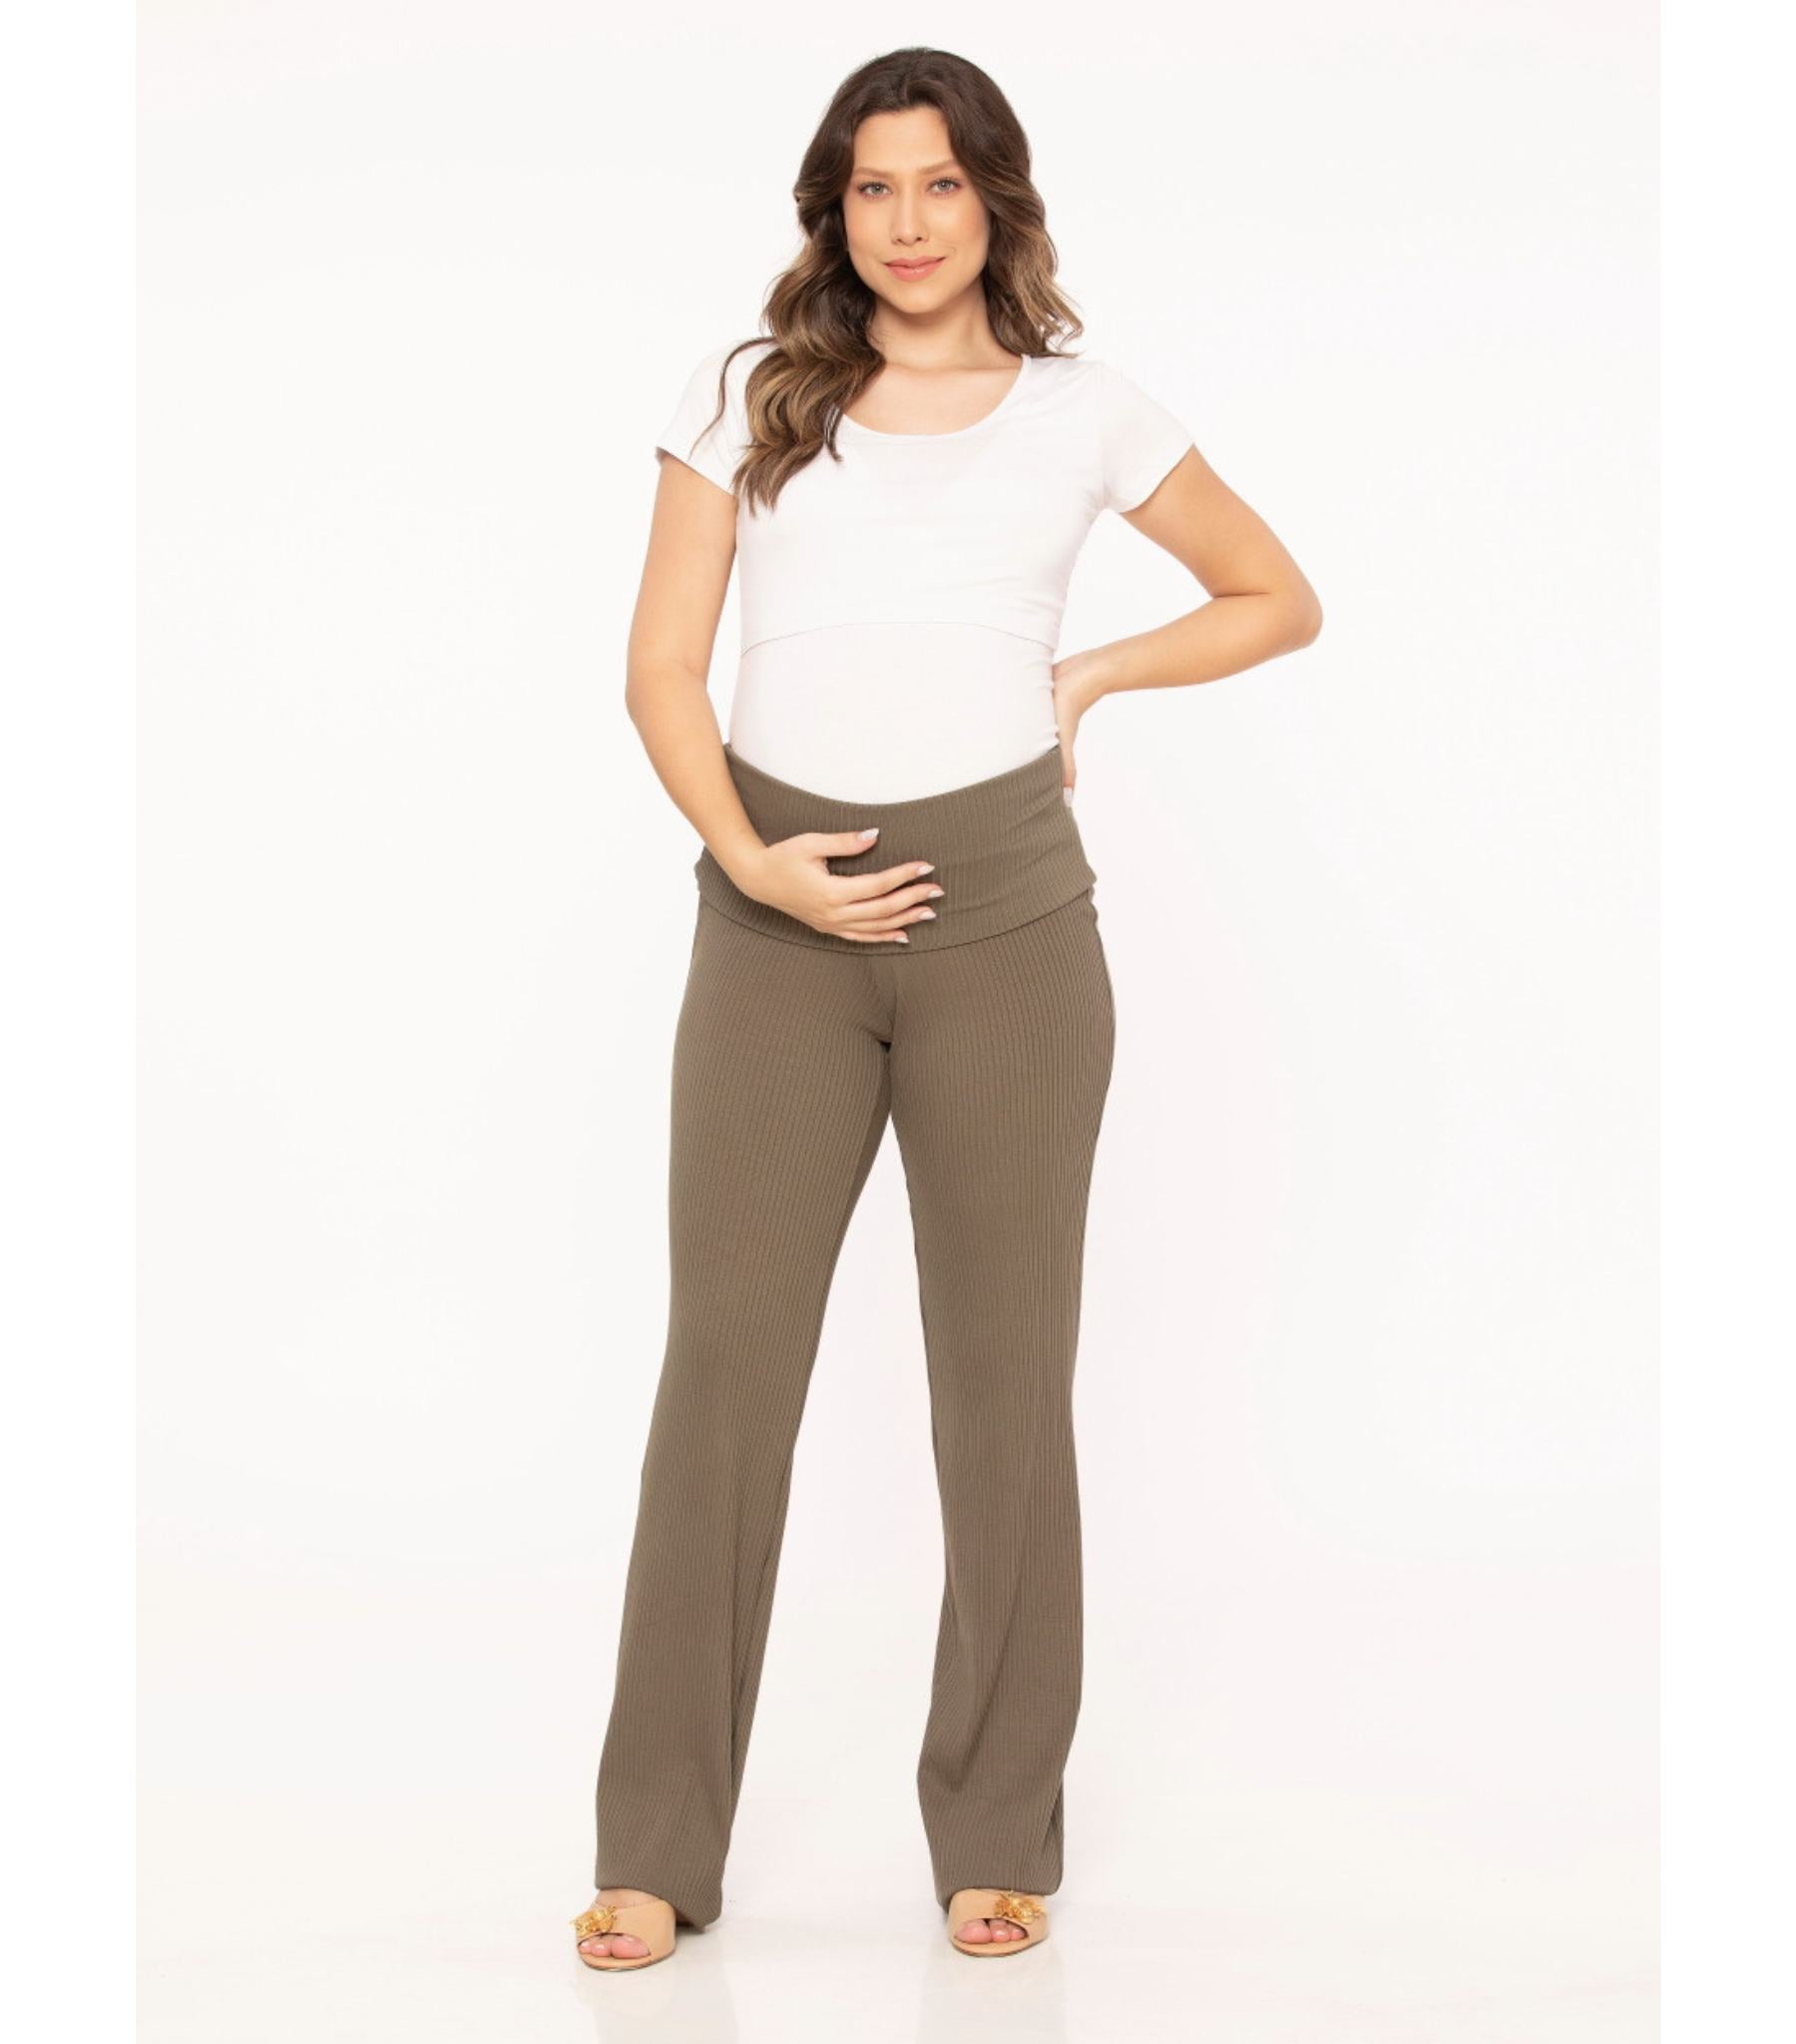 Maternity Sportswear Pants - Pregnancy Yoga Pants MossGreen